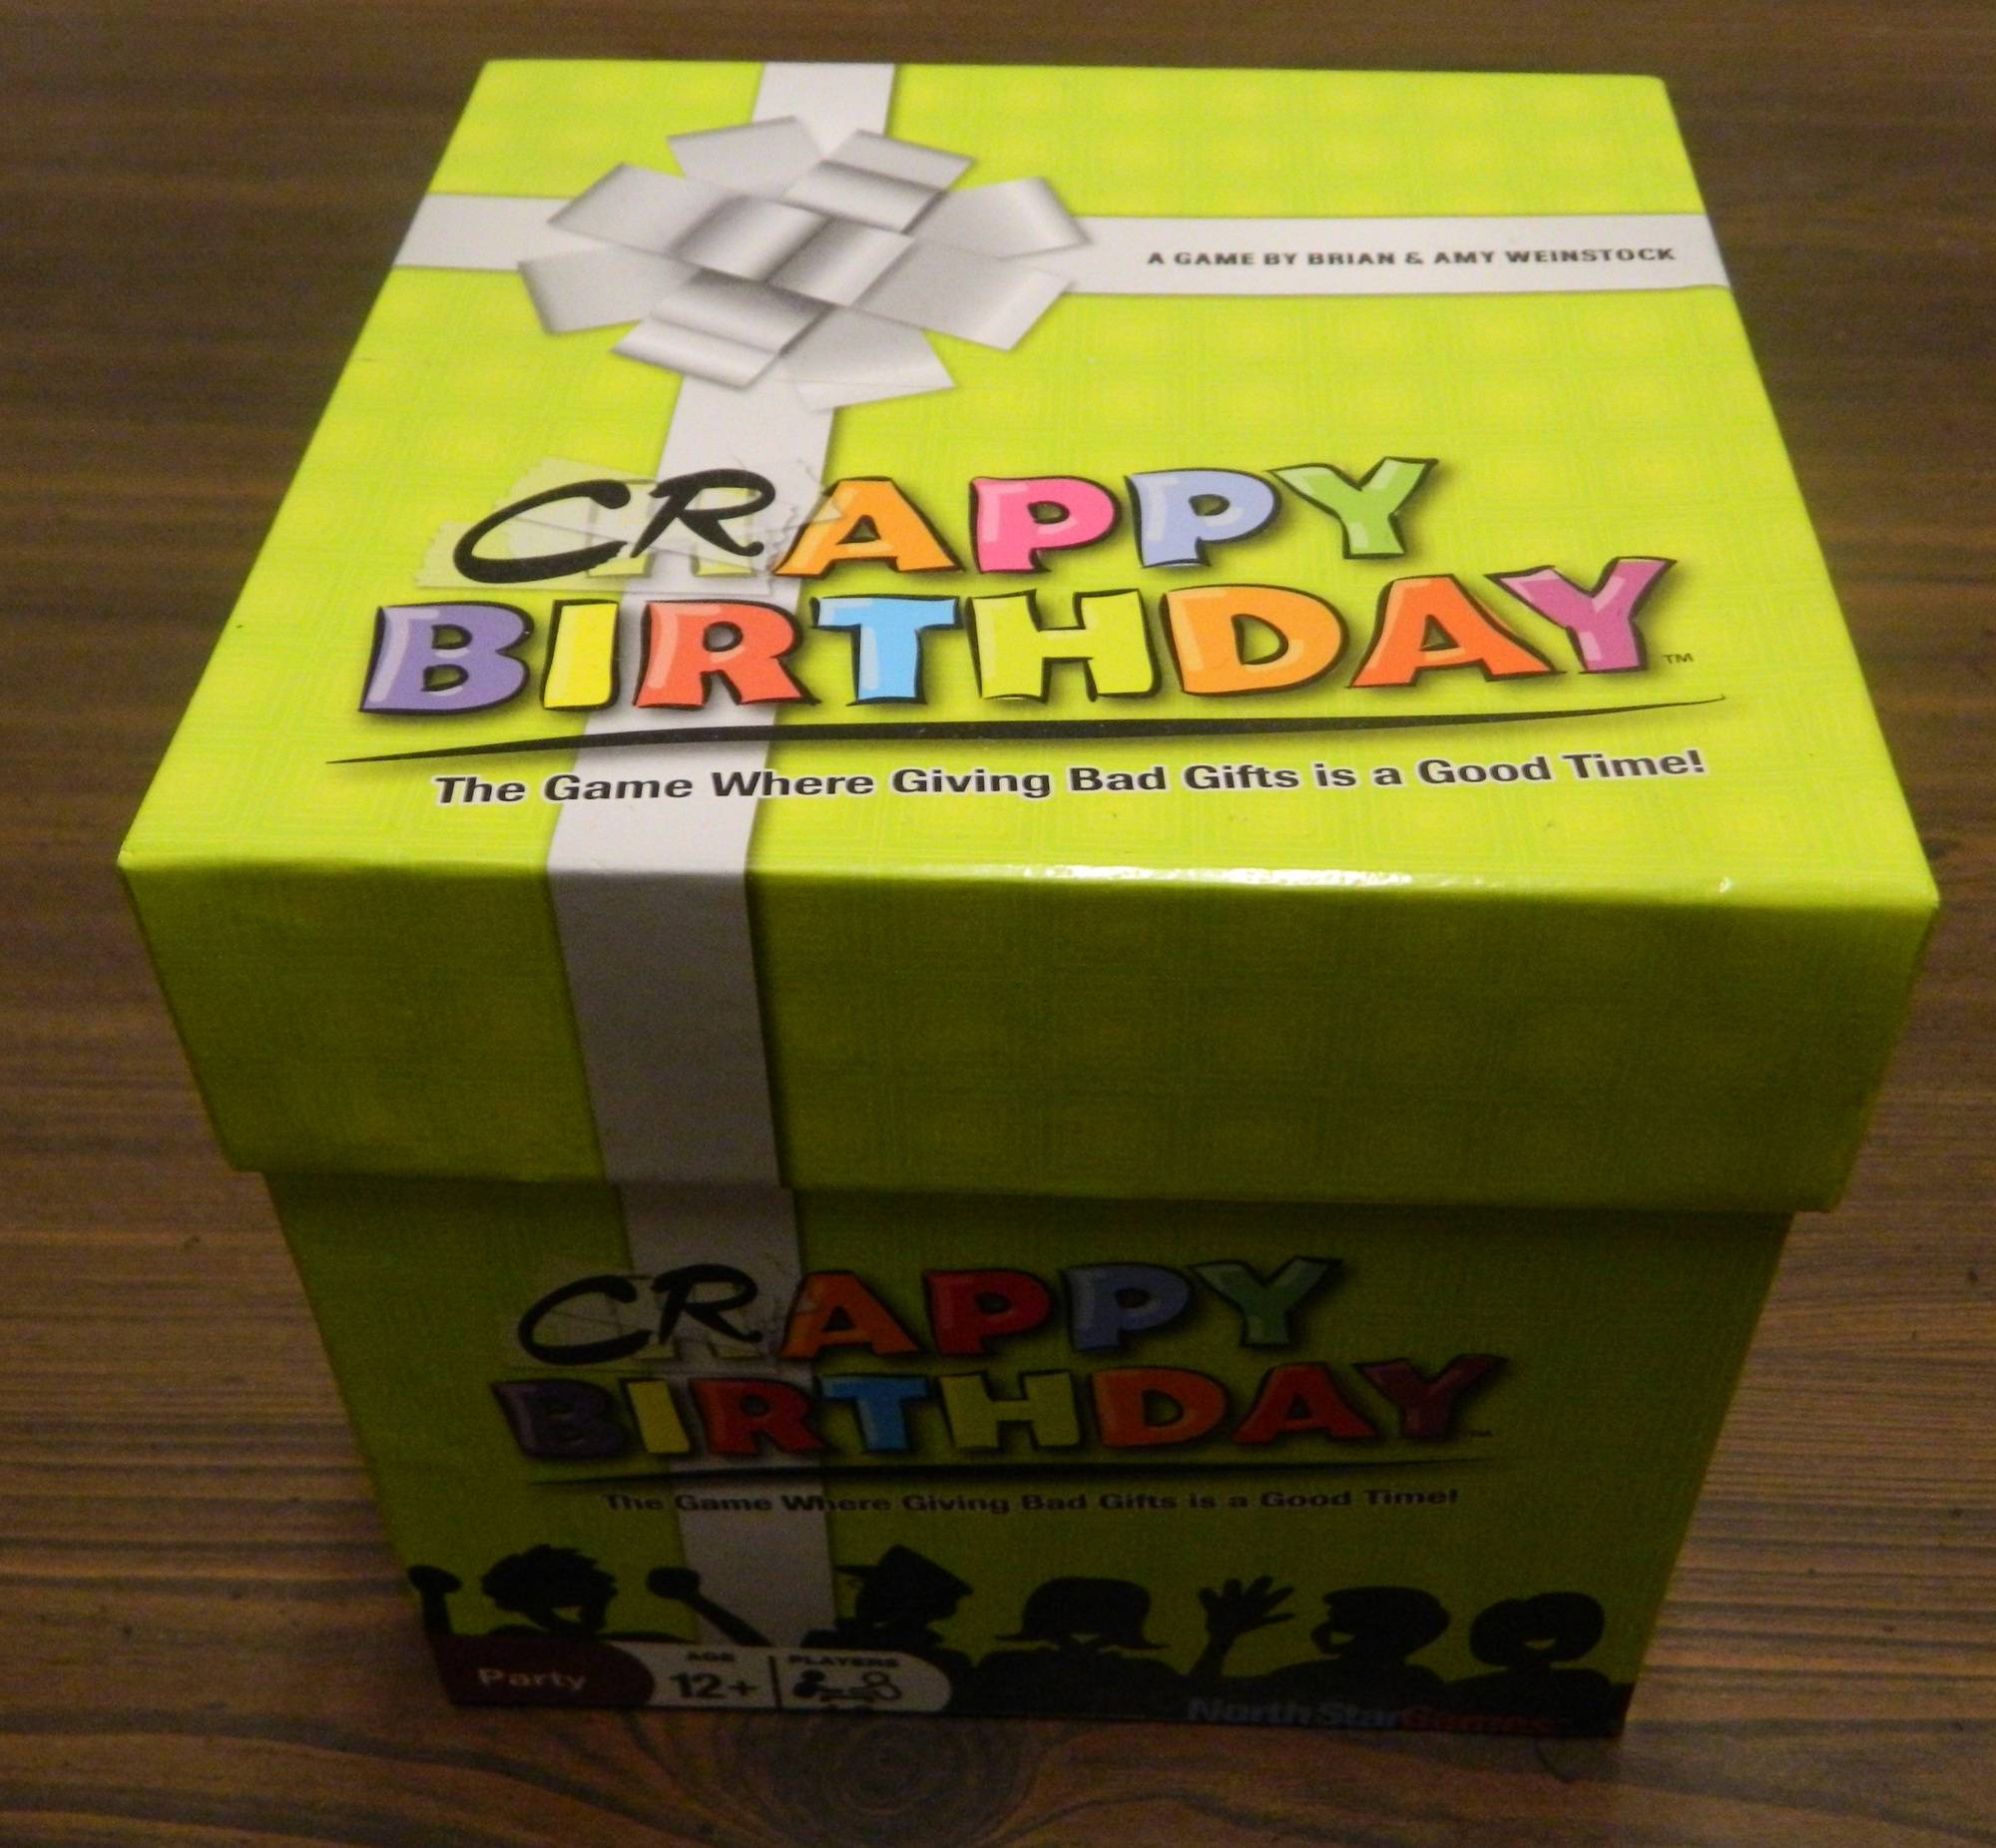 Box for Crappy Birthday